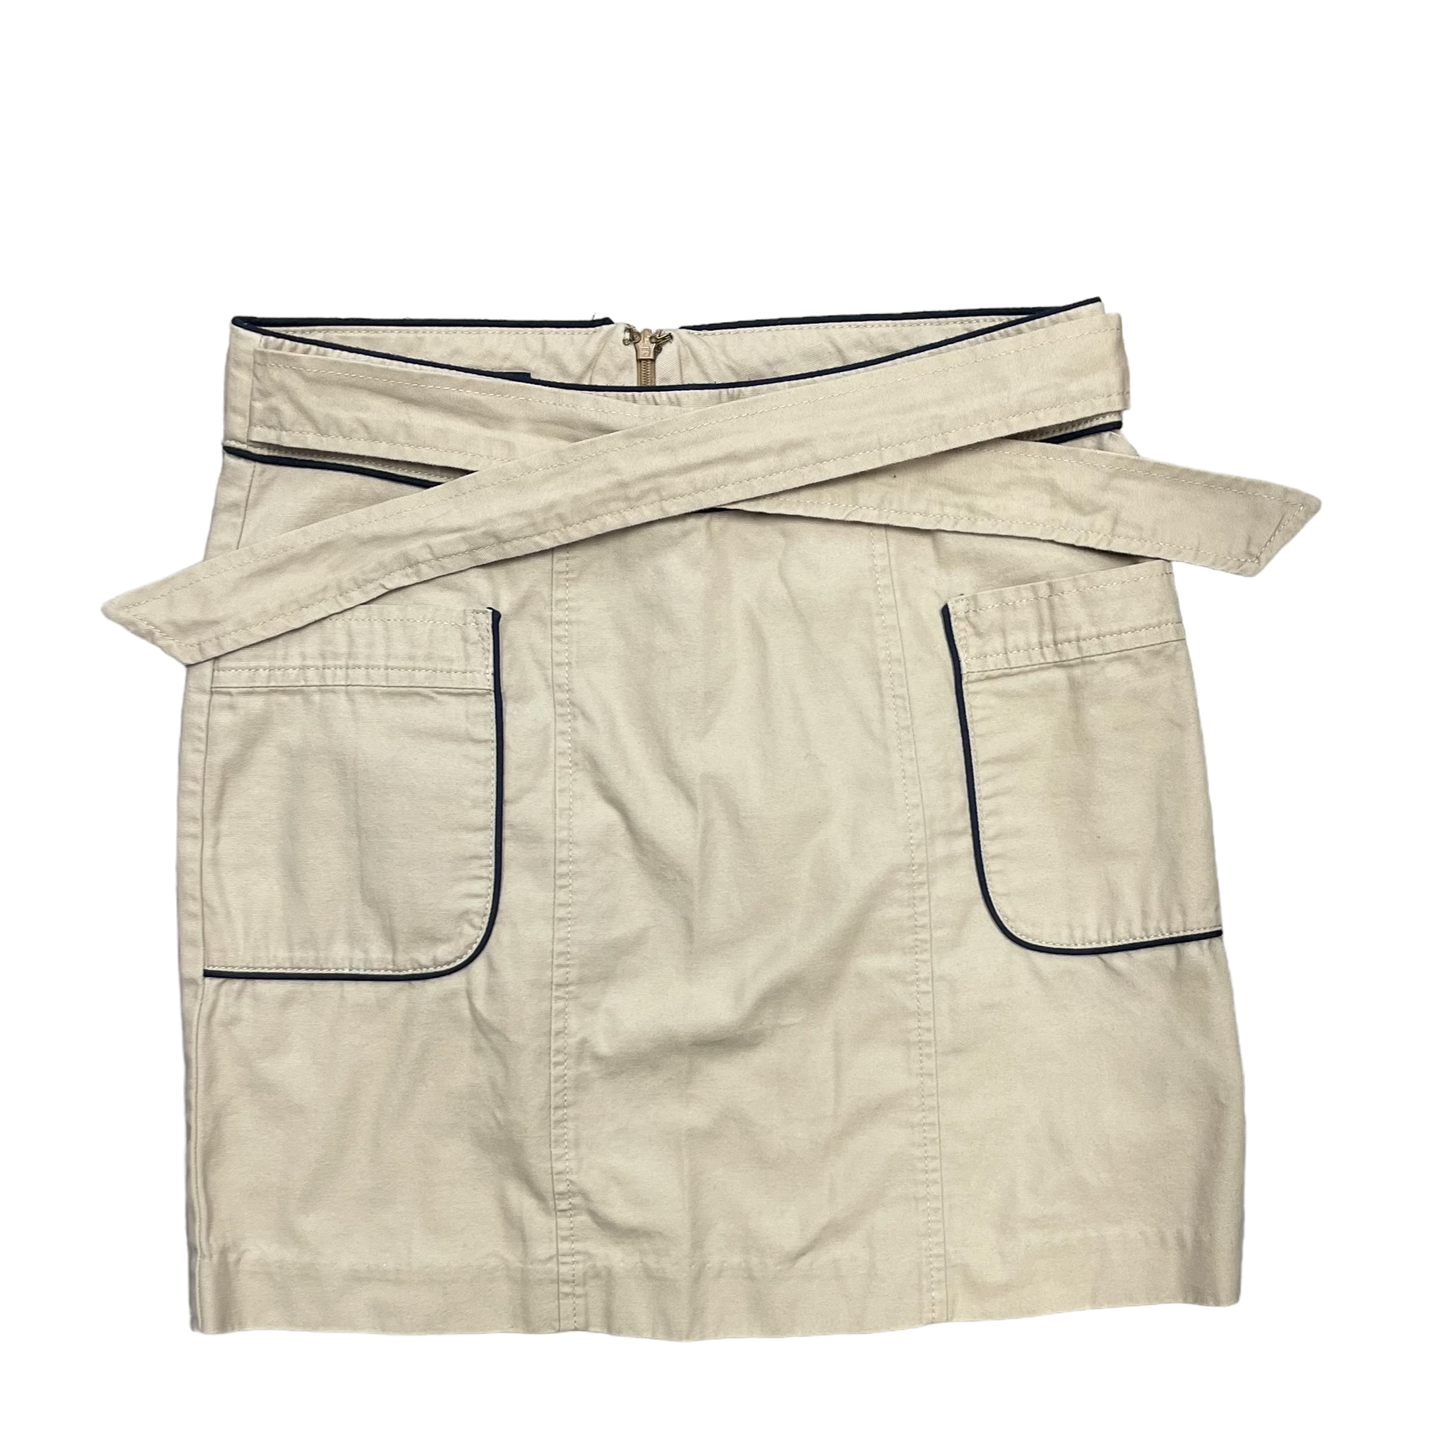 Skirt Mini & Short By Tommy Hilfiger  Size: 2